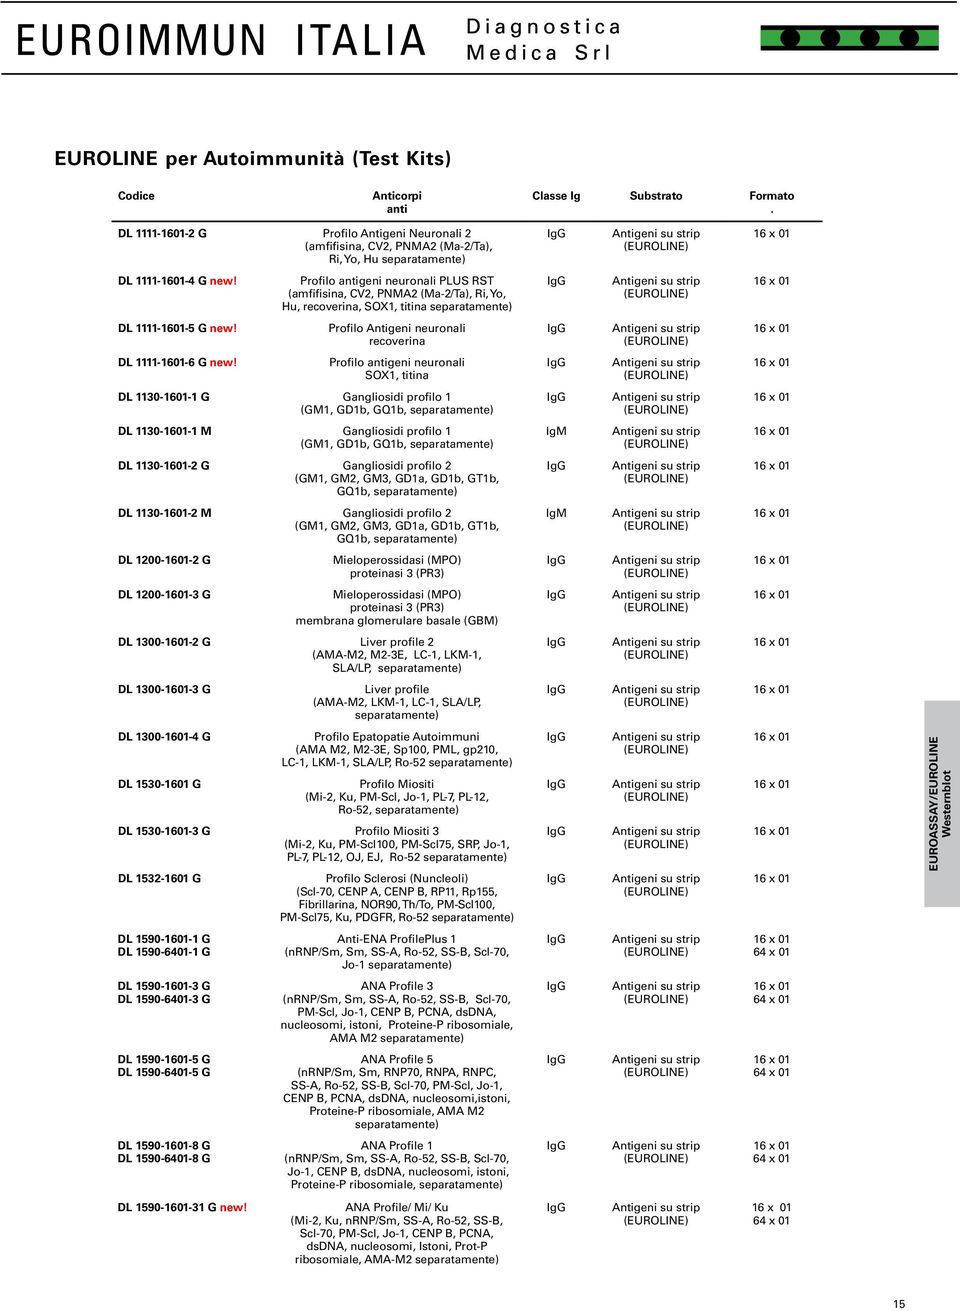 Profilo antigeni neuronali PLUS RST (amfifisina, CV2, PNMA2 (Ma-2/Ta), Ri, Yo, Hu, recoverina, SOX1, titina separatamente) DL 1111-1601-5 G new!